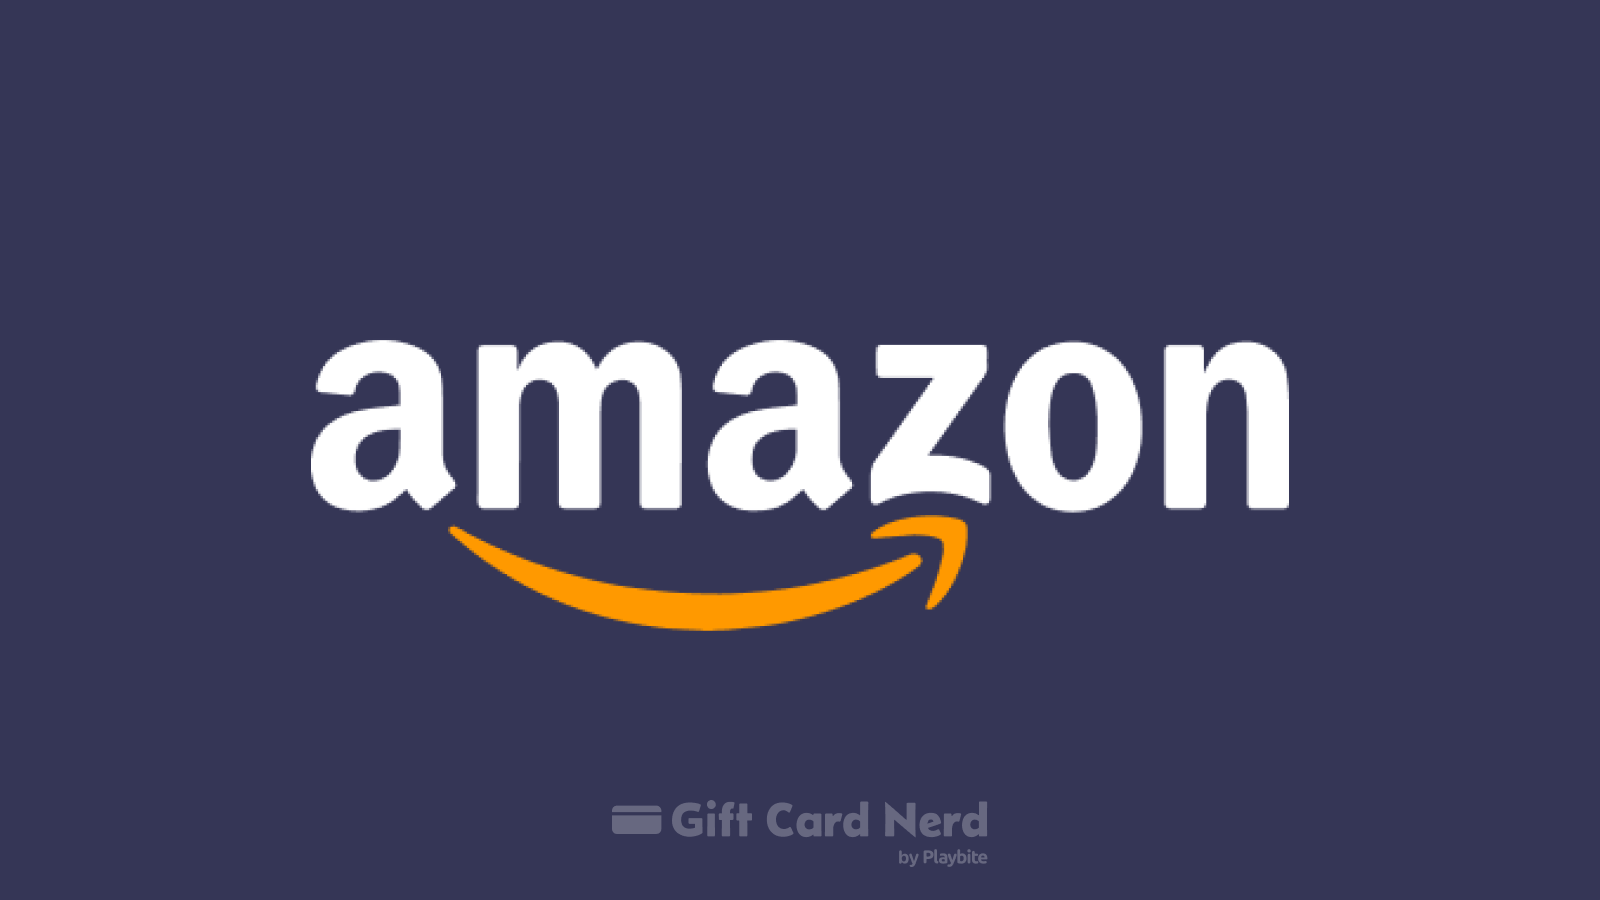 Can I Use an Amazon Gift Card on Grubhub?